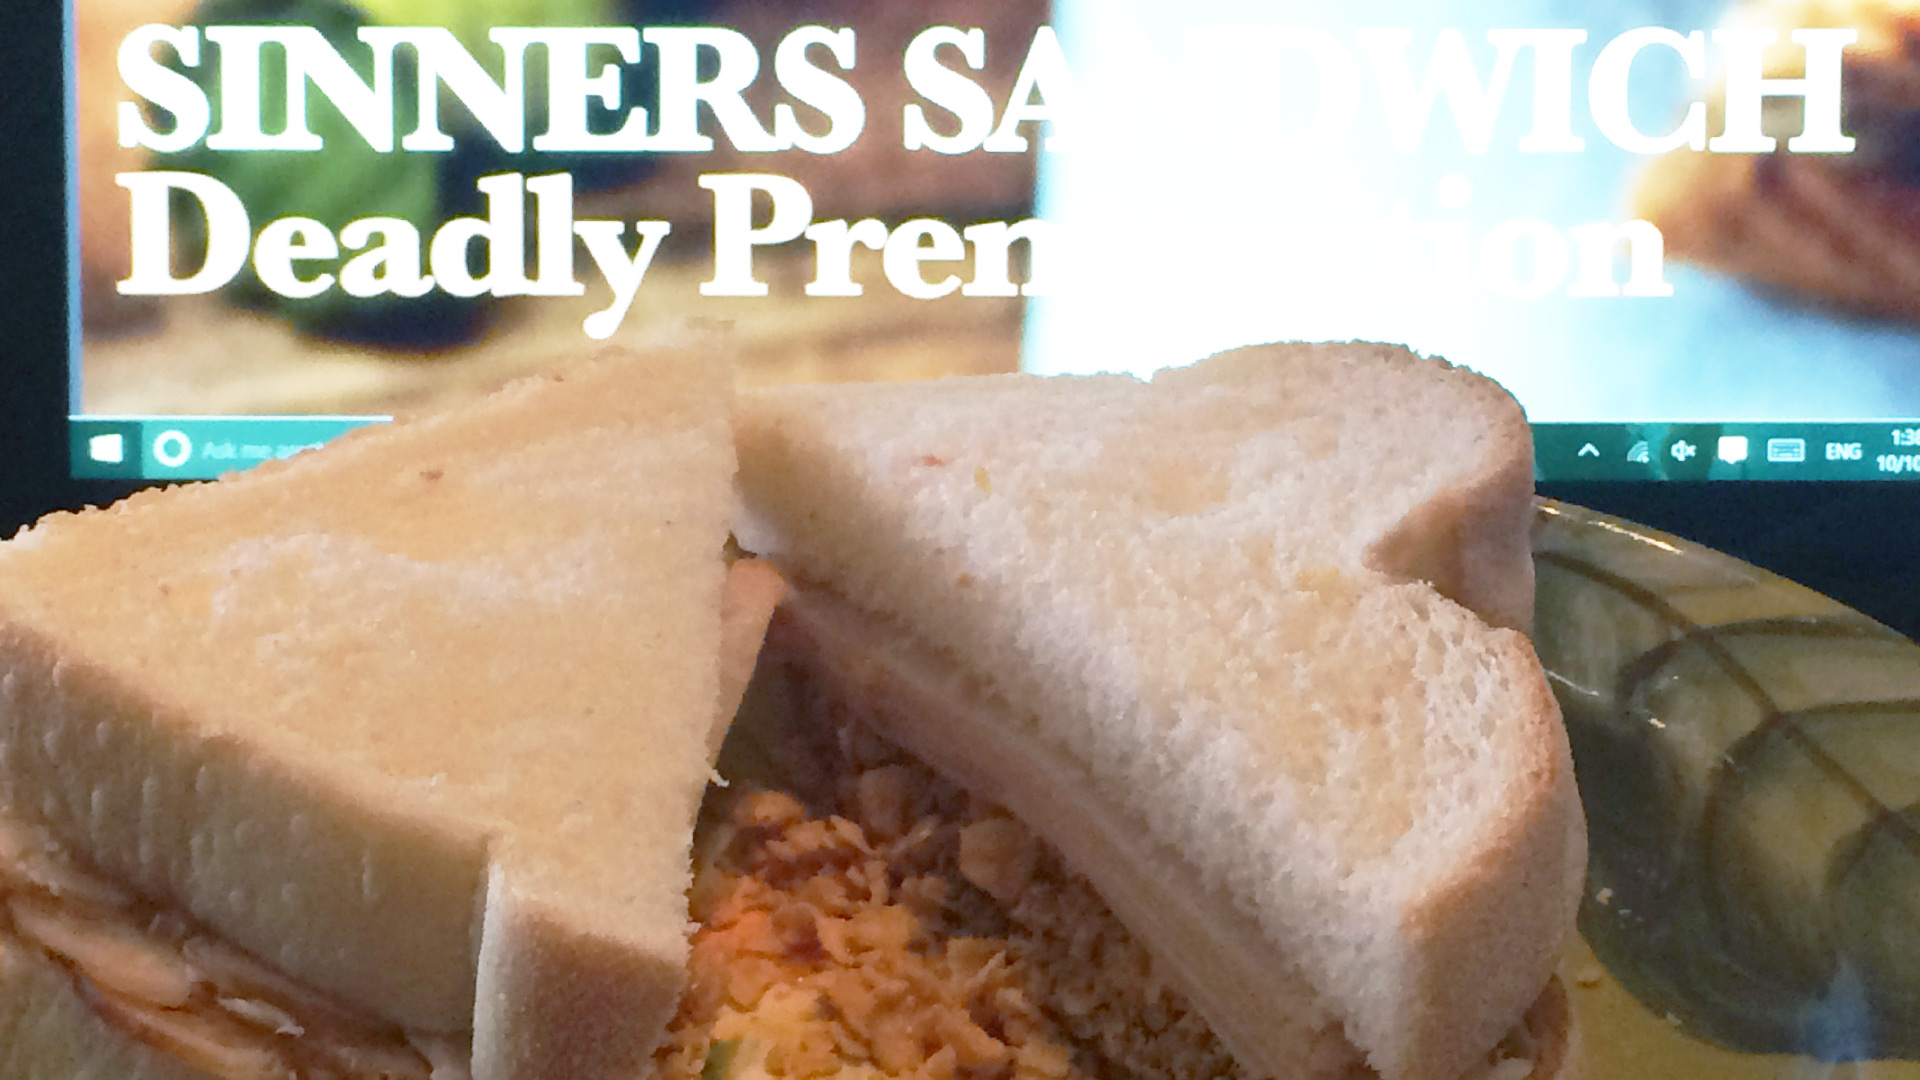 Sinner's Sandwich from Deadly Premonition